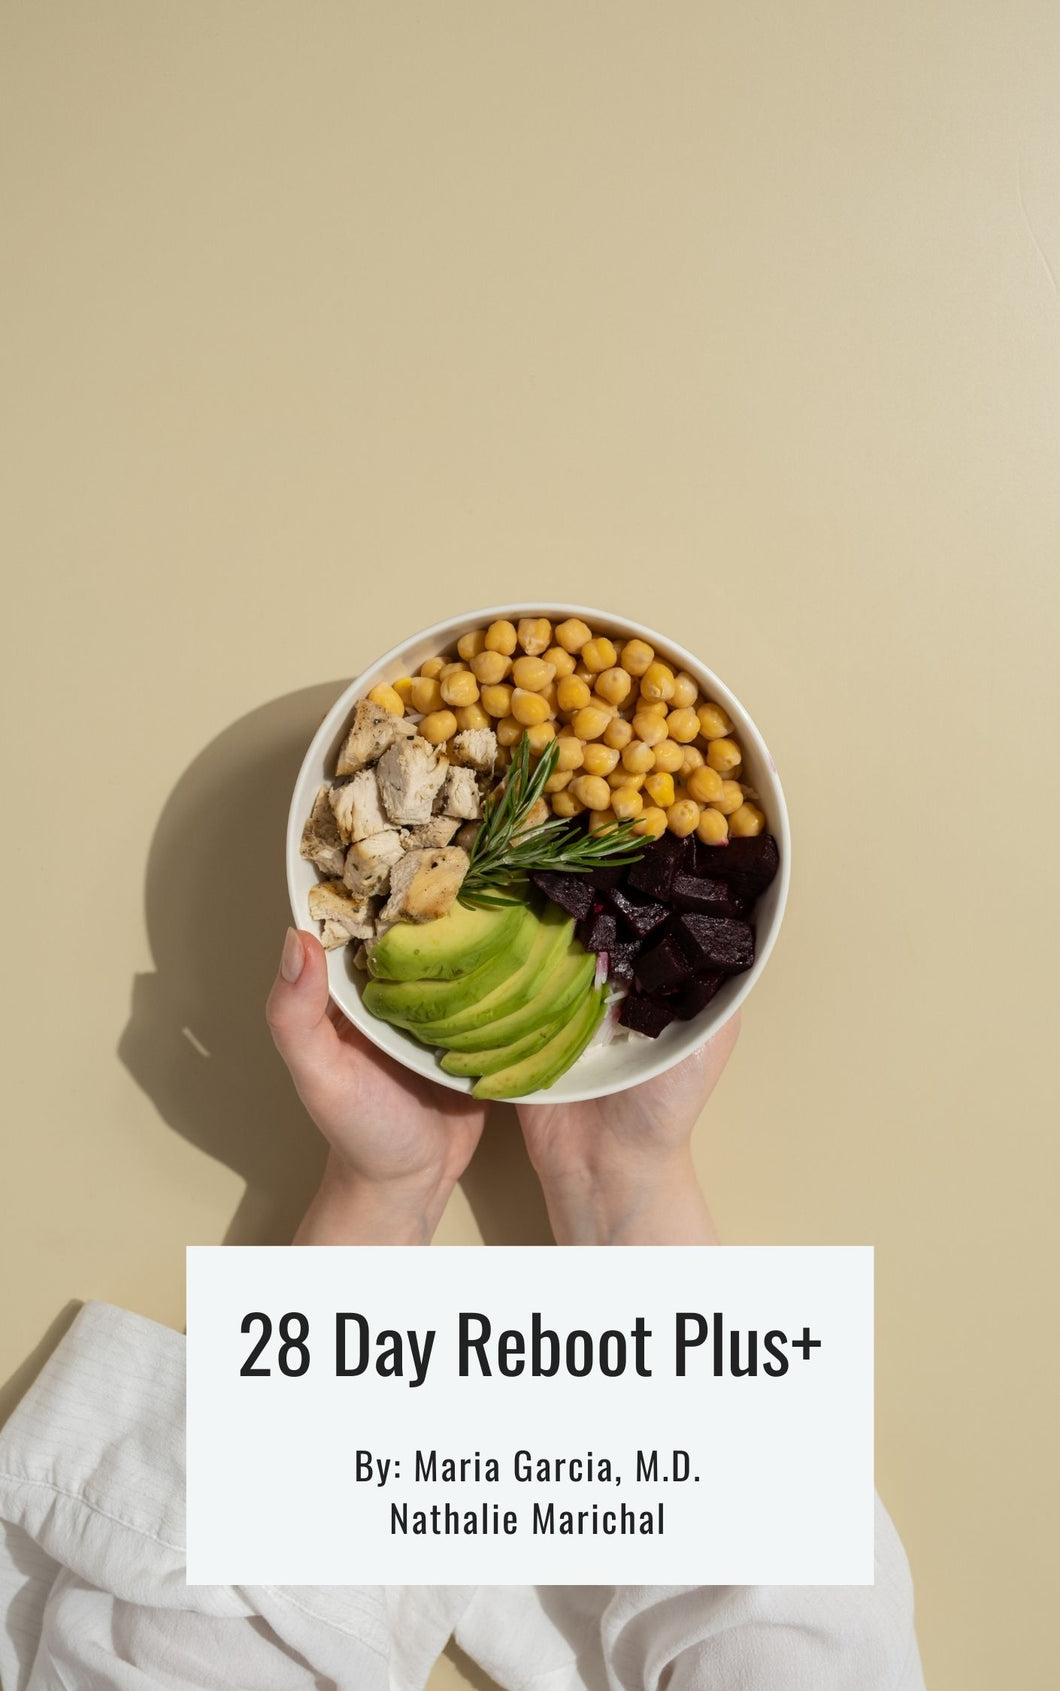 28 Day Reboot Plus+